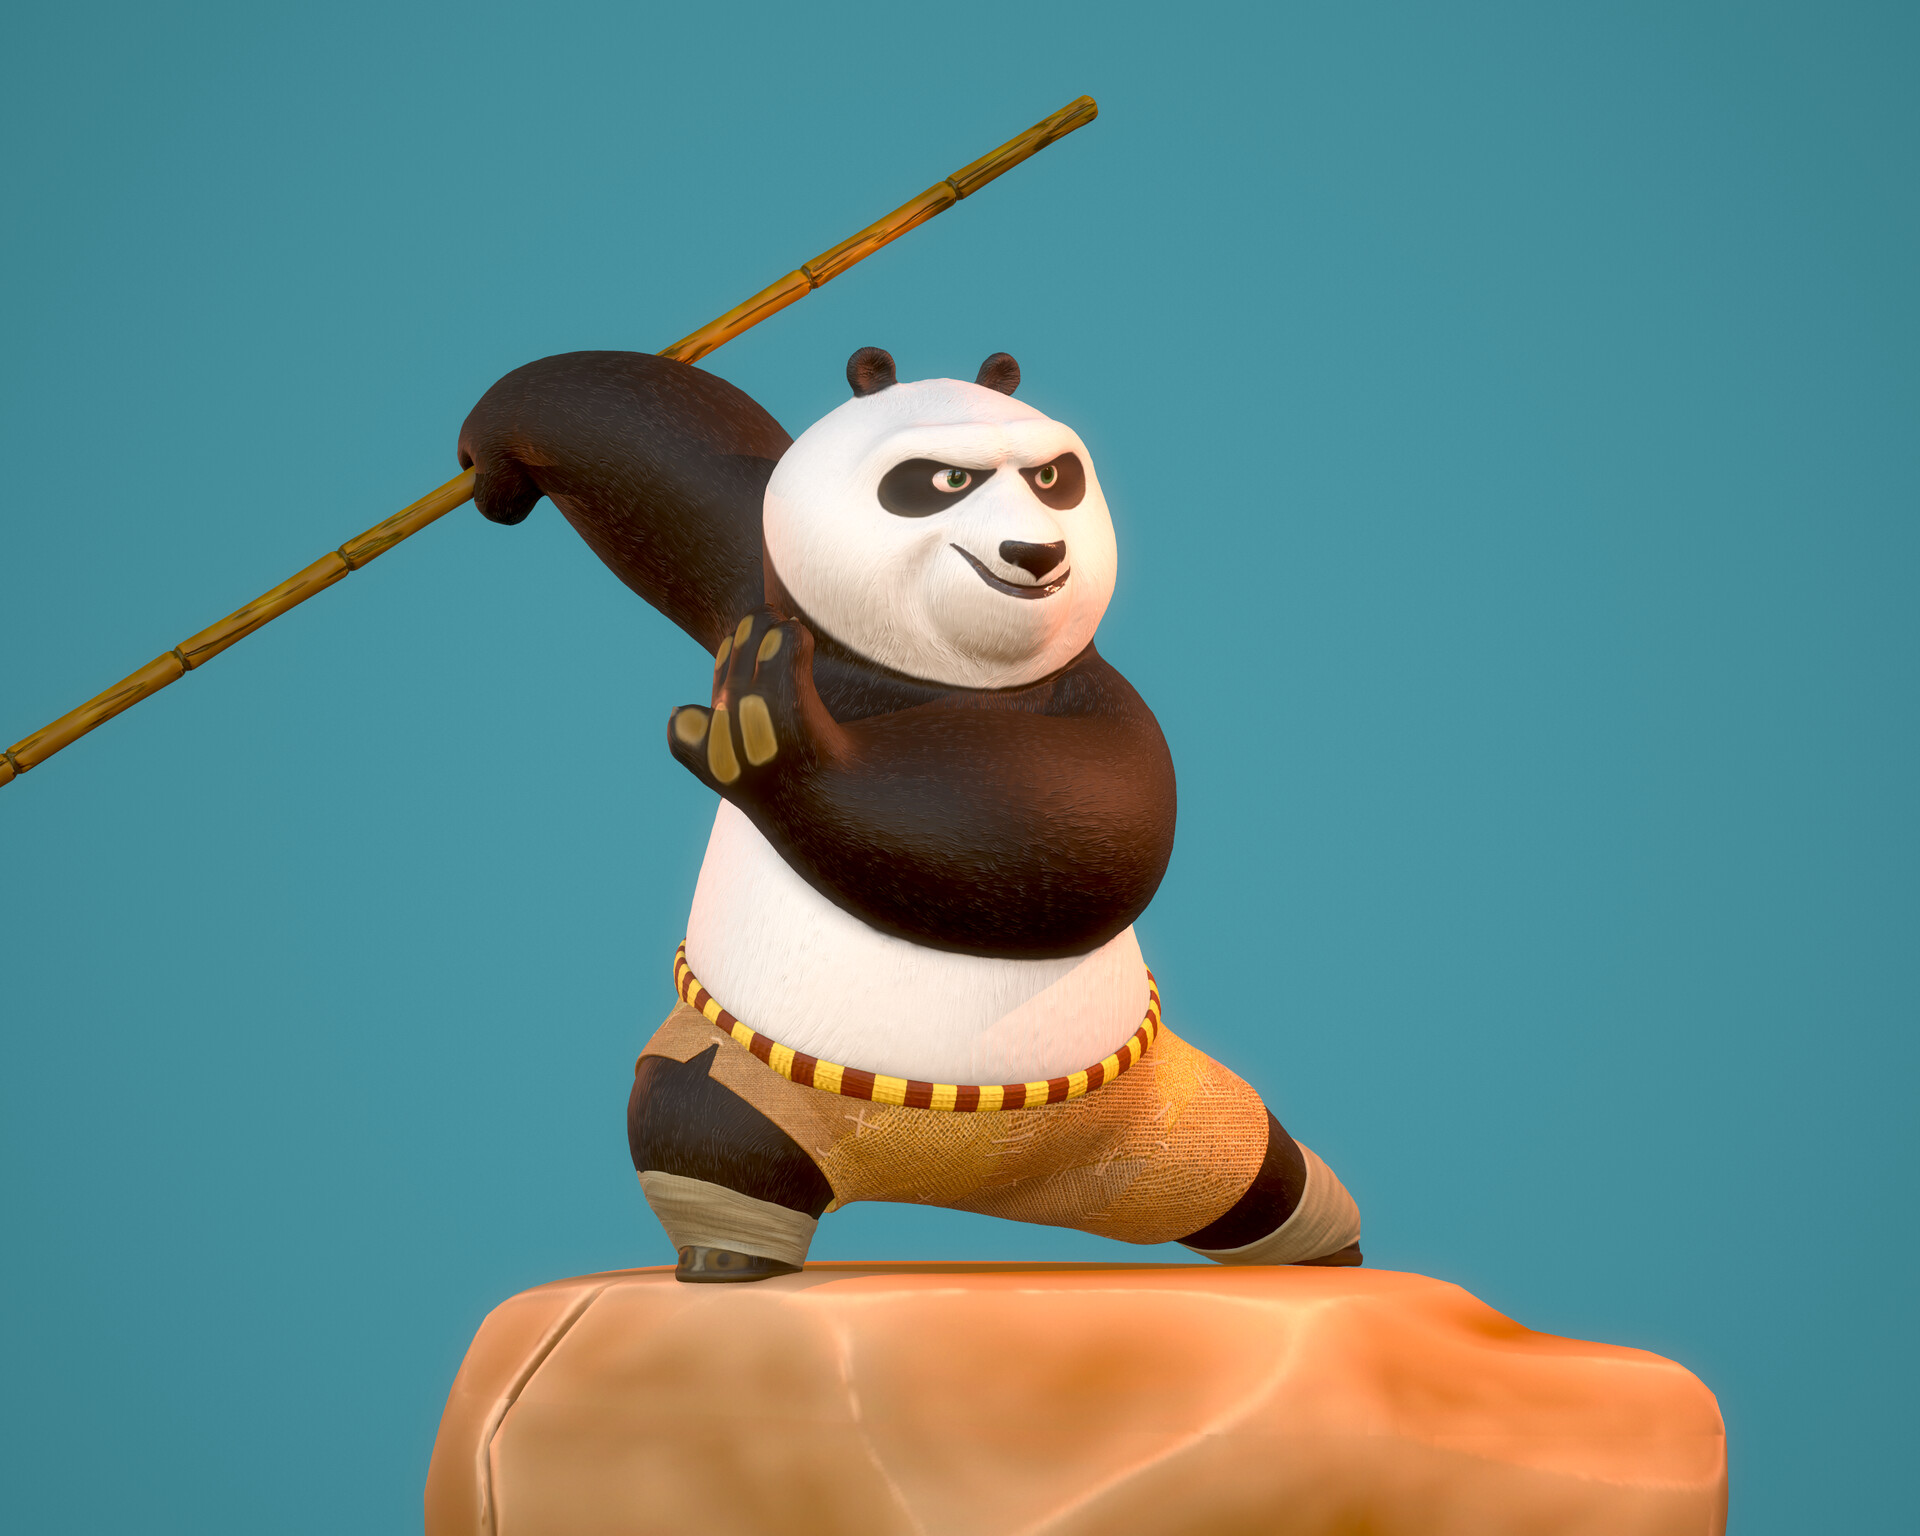 Kung fu panda 4 türkçe